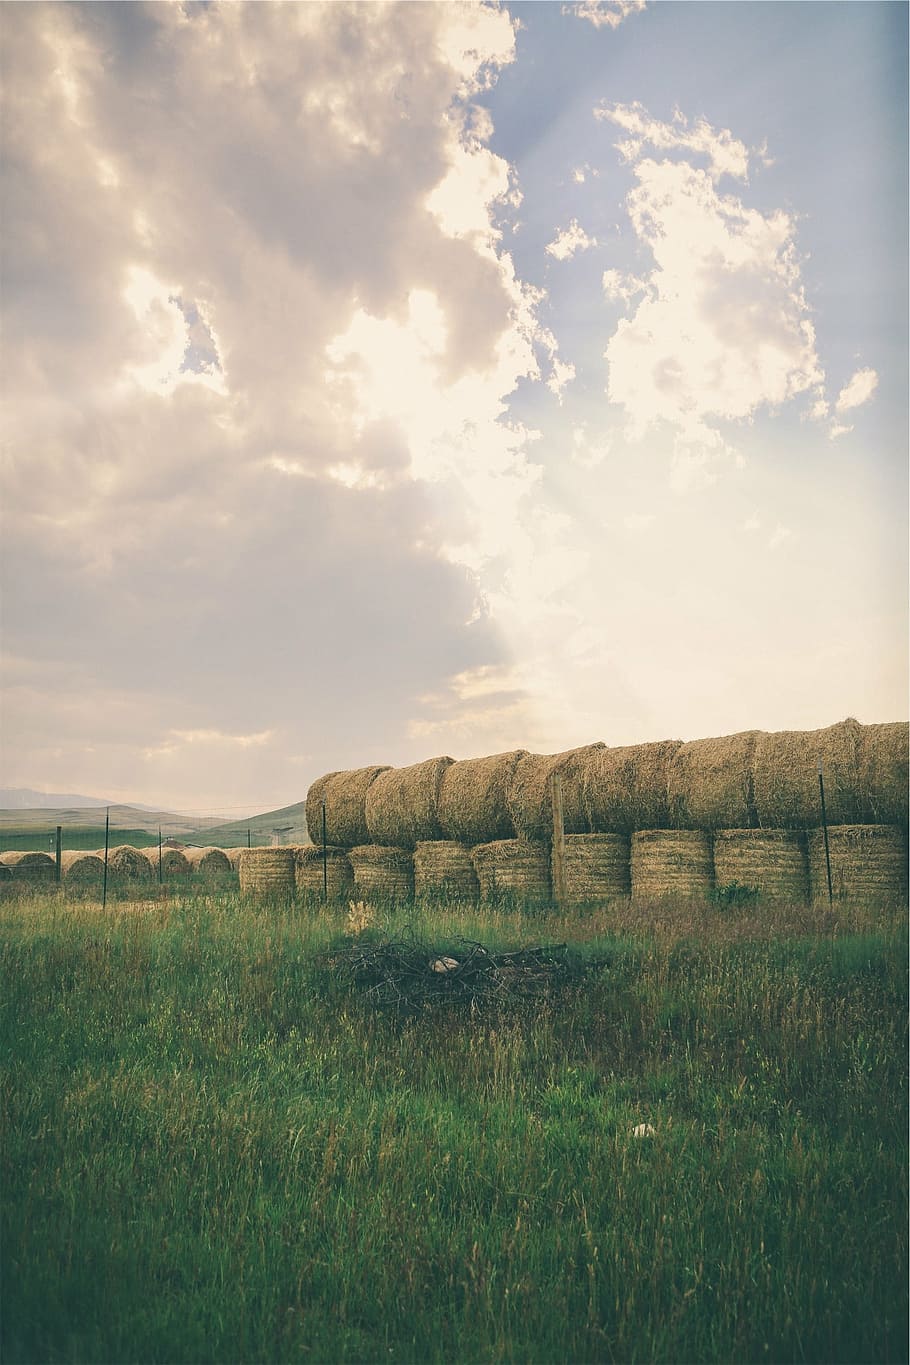 hay, bales, grass, farm, fields, rural, country, sky, cloud - sky, land